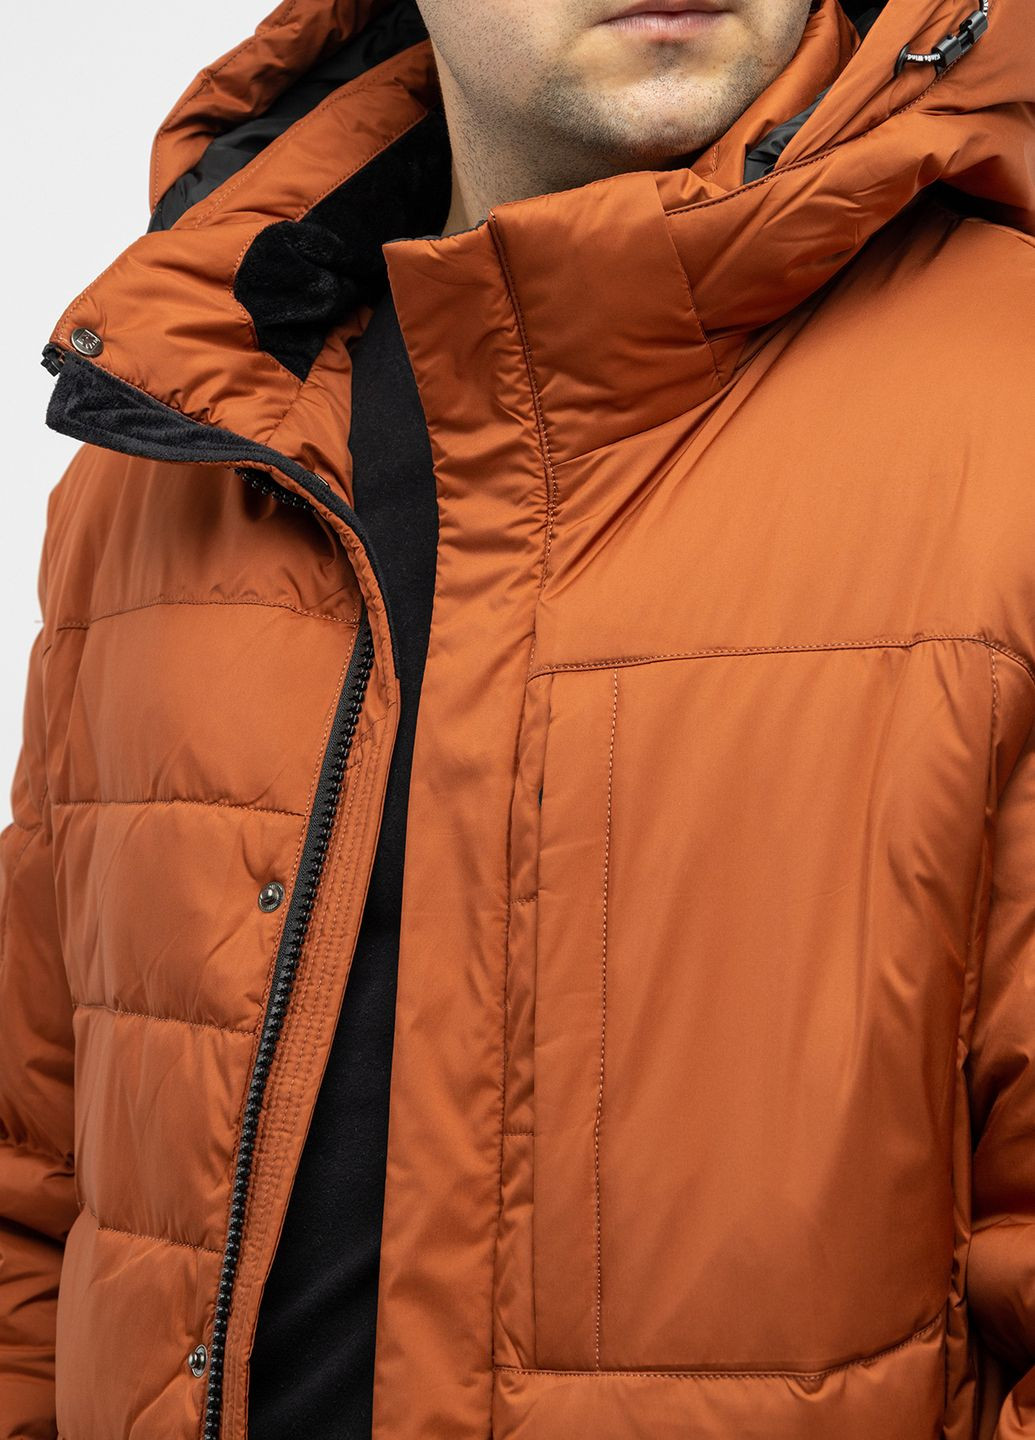 Коричневая зимняя куртка мужская цвет коричневый цб-00220554 Kings Wind